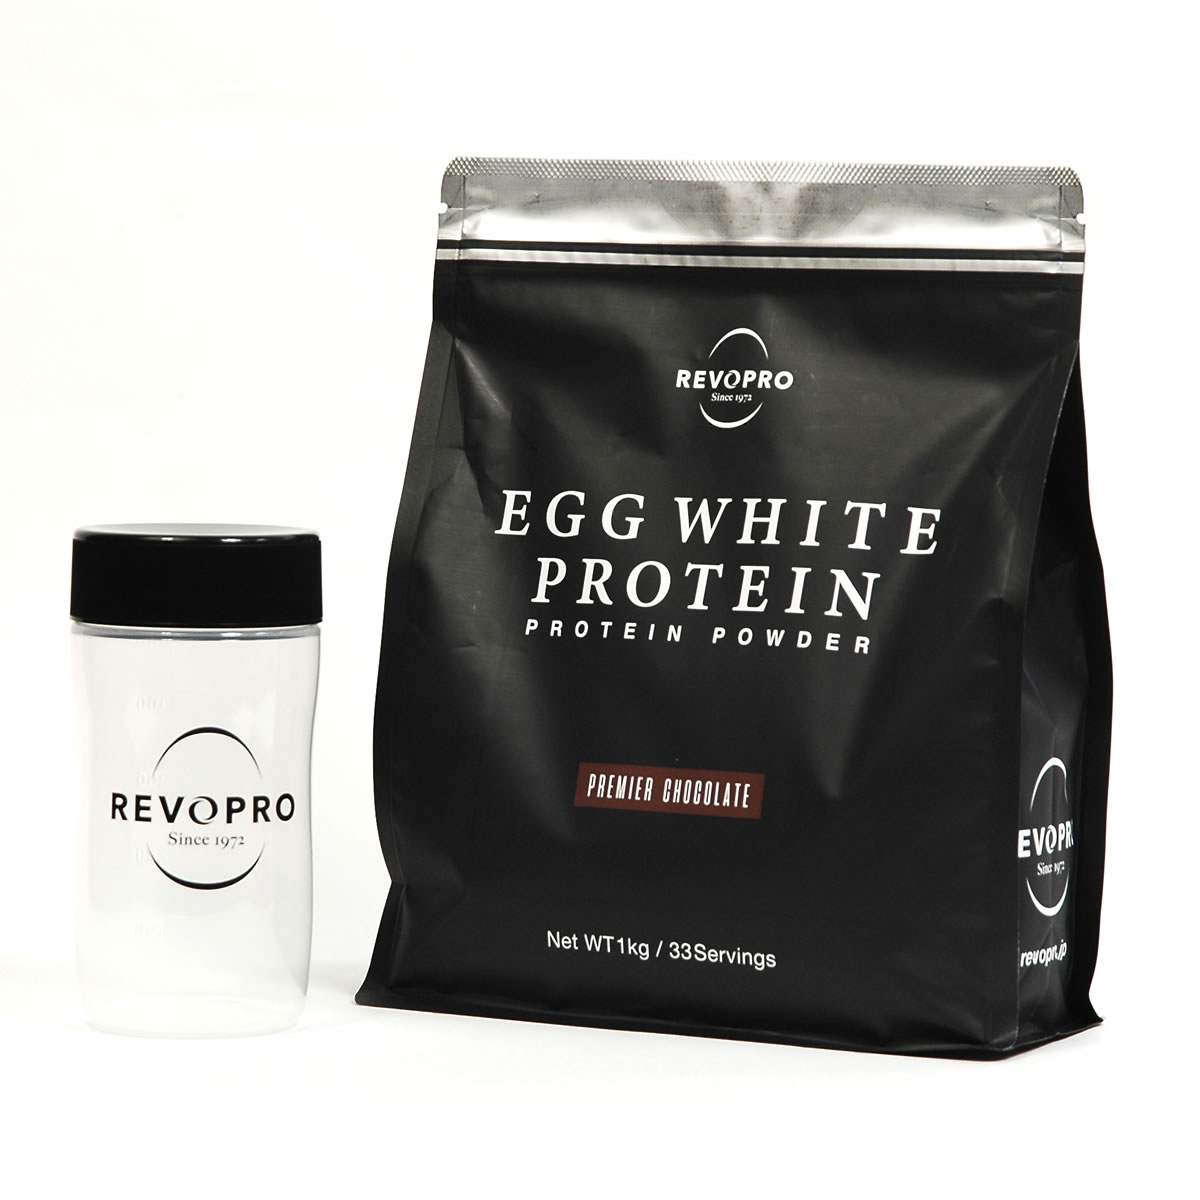 REVOPRO®エッグホワイトプロテイン プレミアム チョコレート味(パウチ) + シェーカーセット